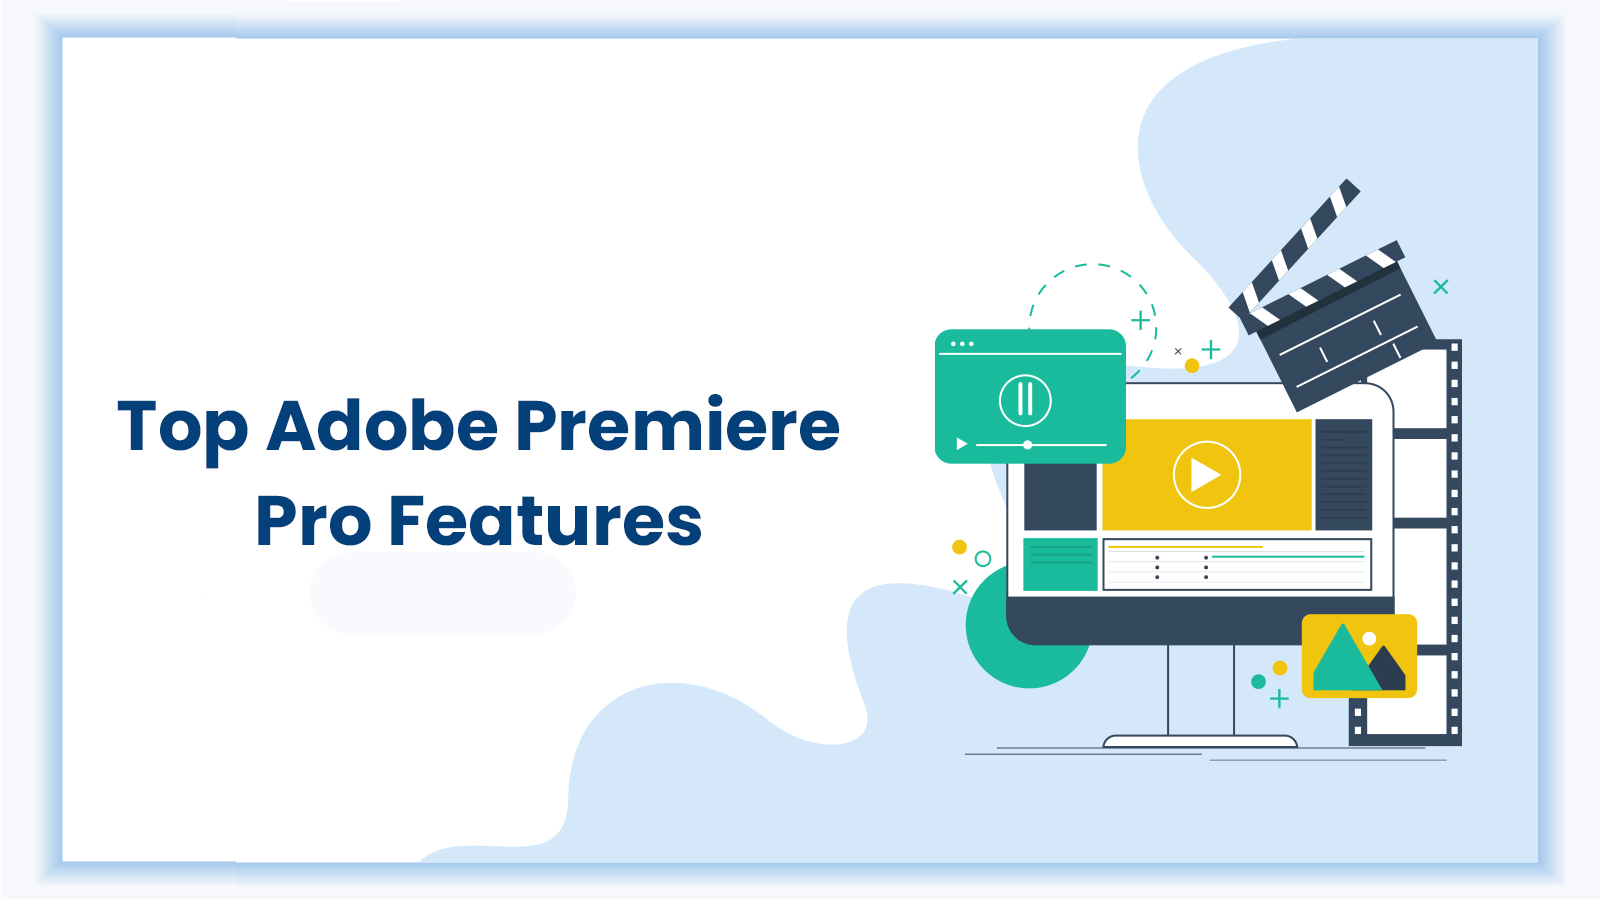 Top Adobe Premier Pro Features